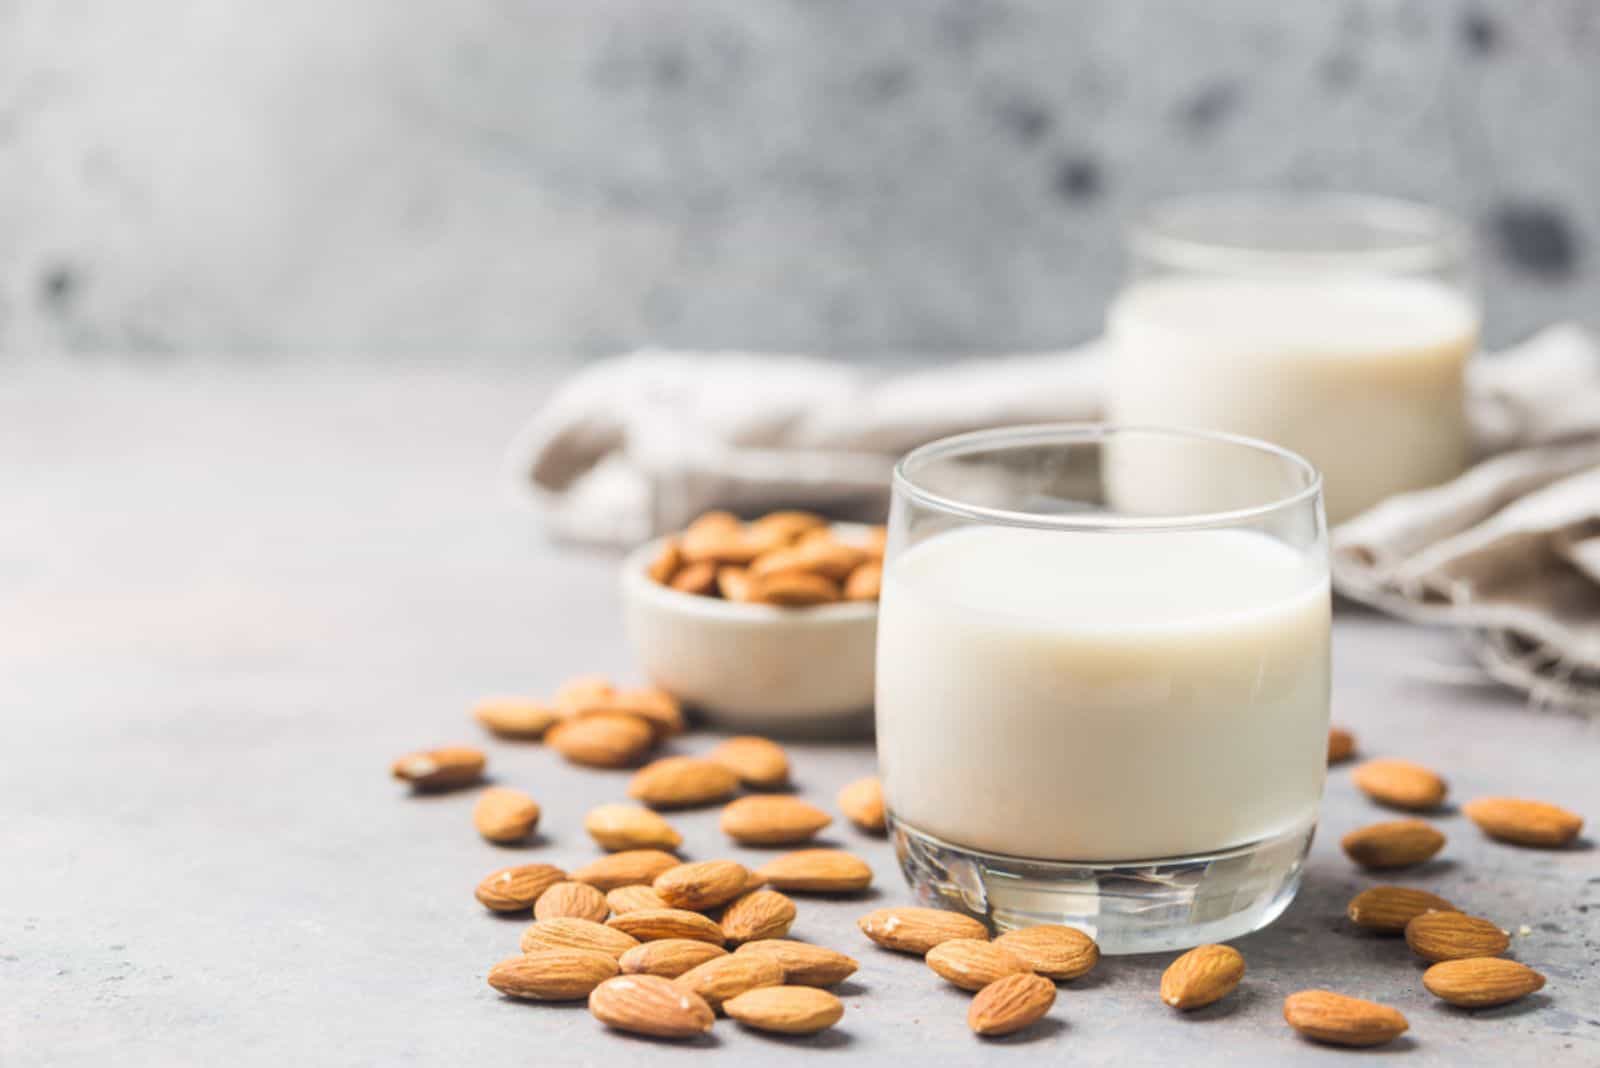 Organic almond milk in a glass